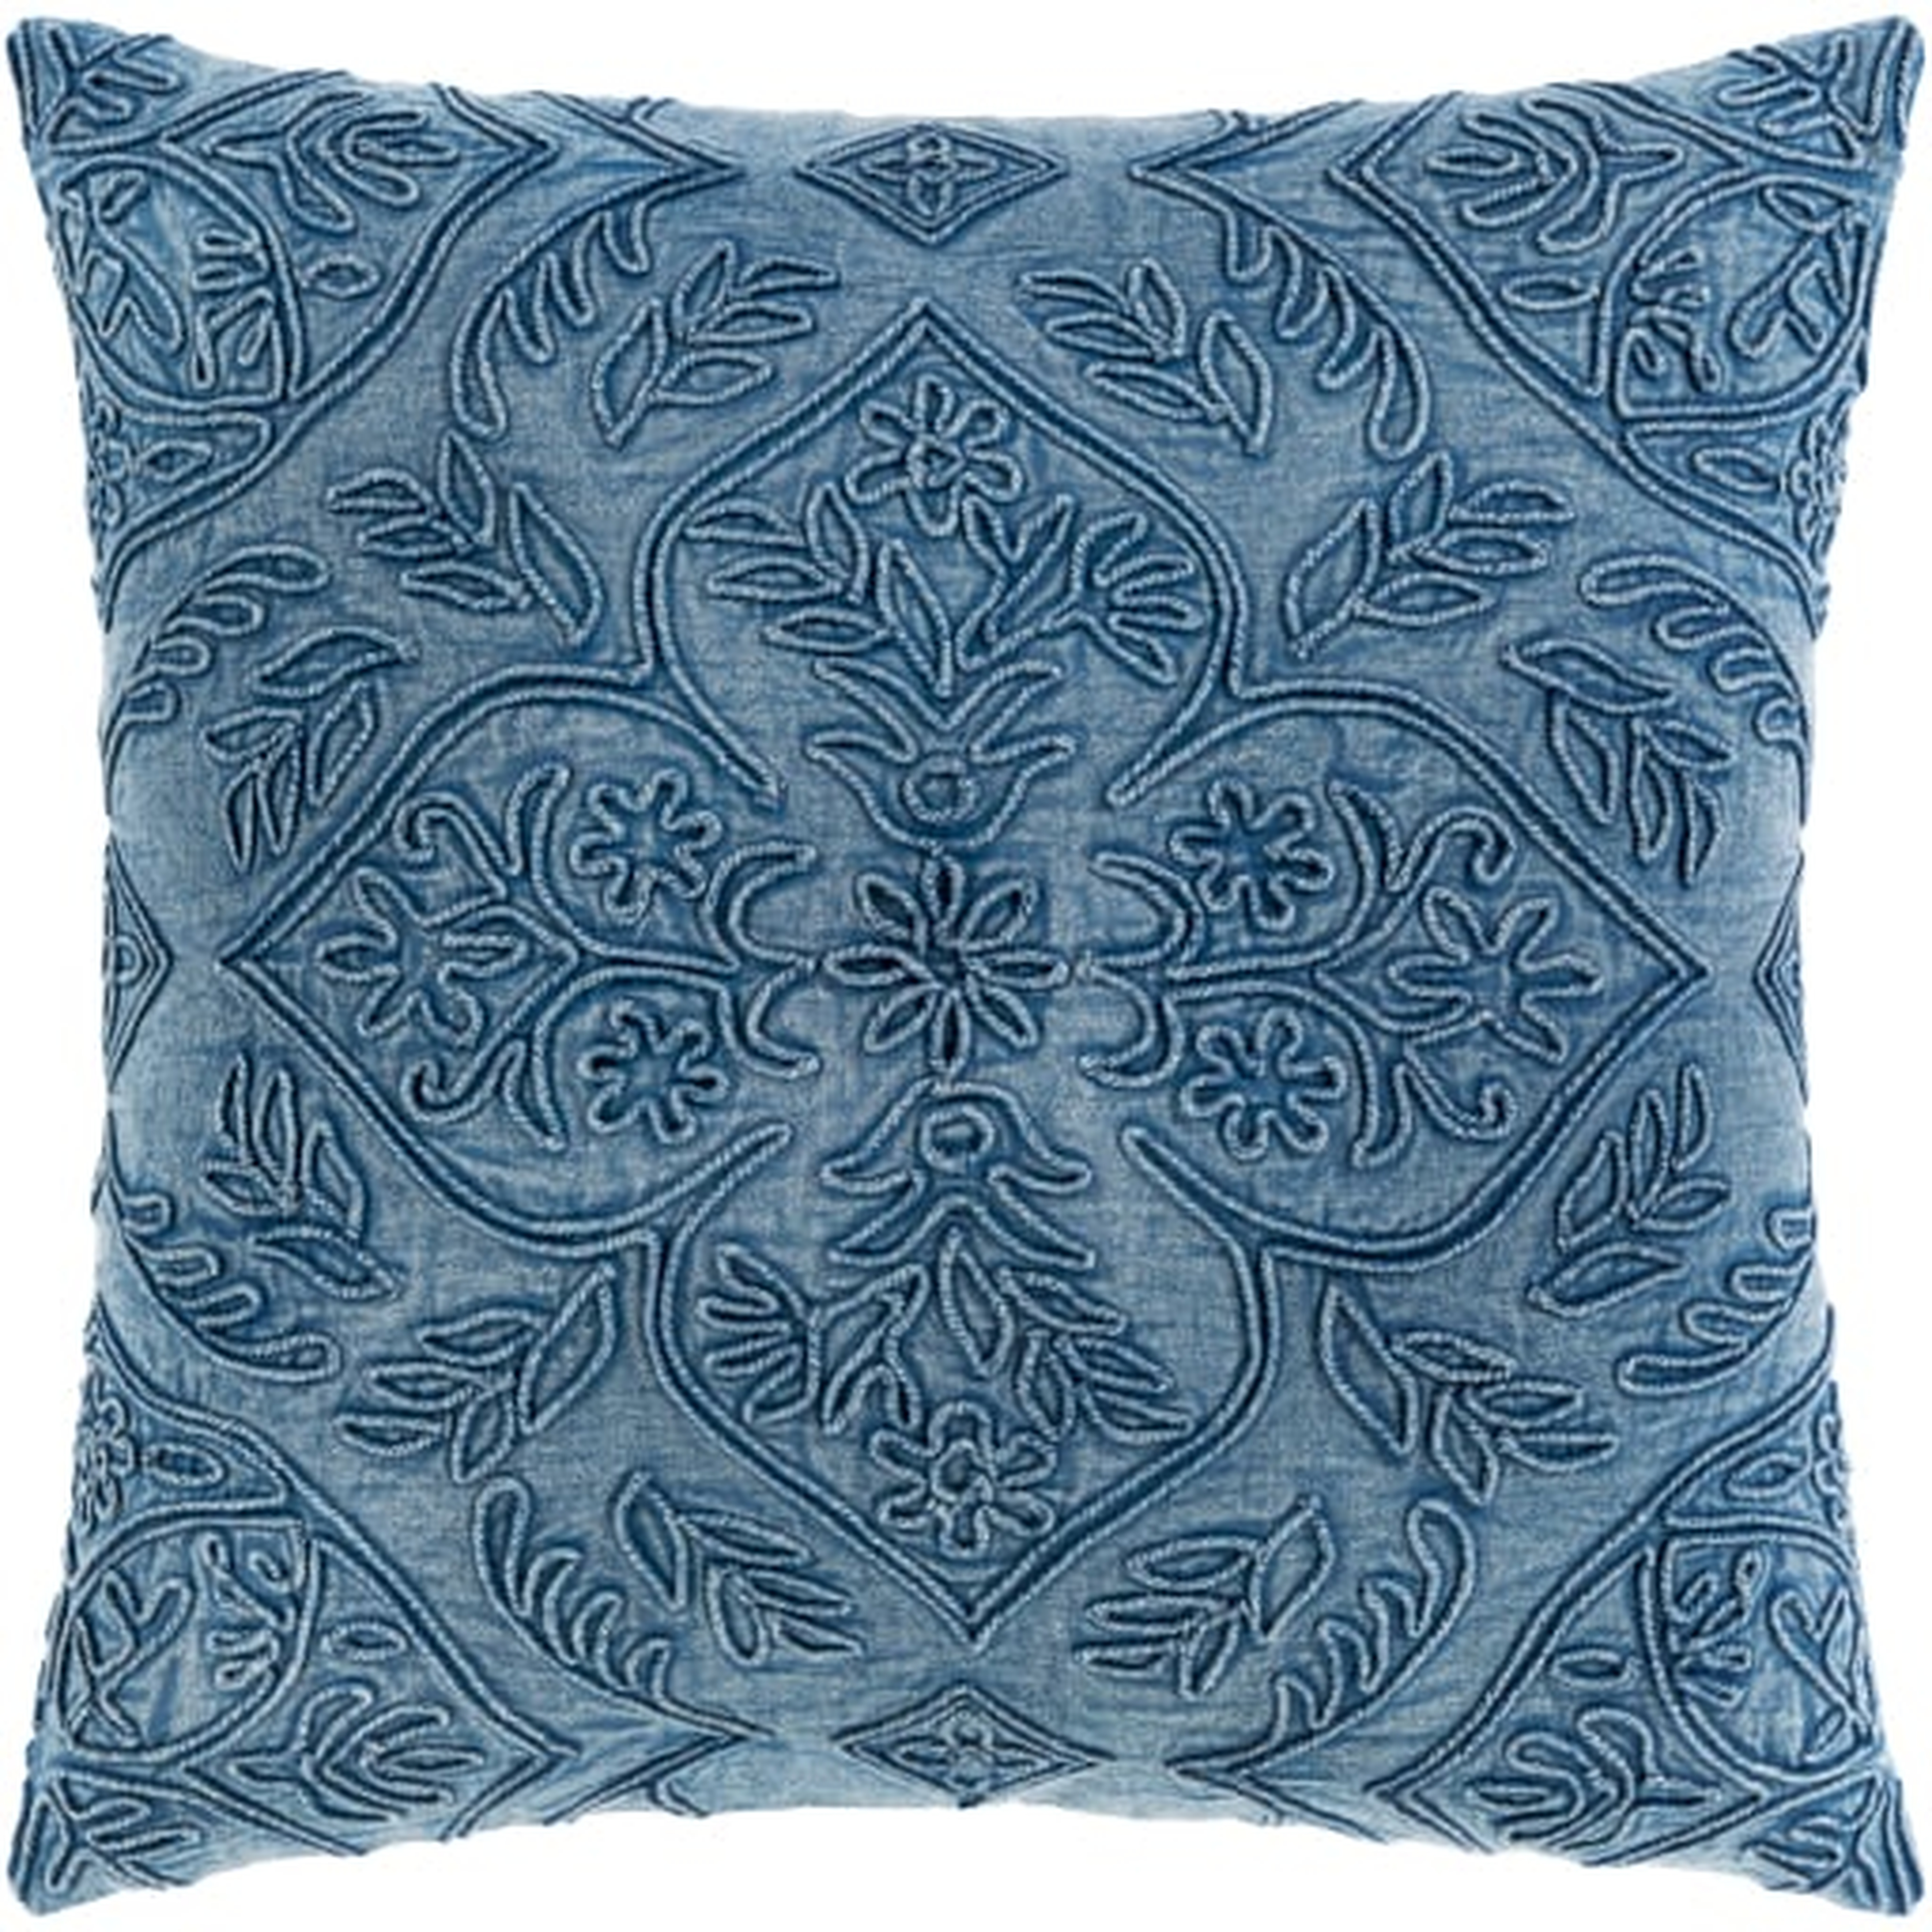 Savanna Pillow, 18" x 18", Blue - DISCONTINUED - Roam Common